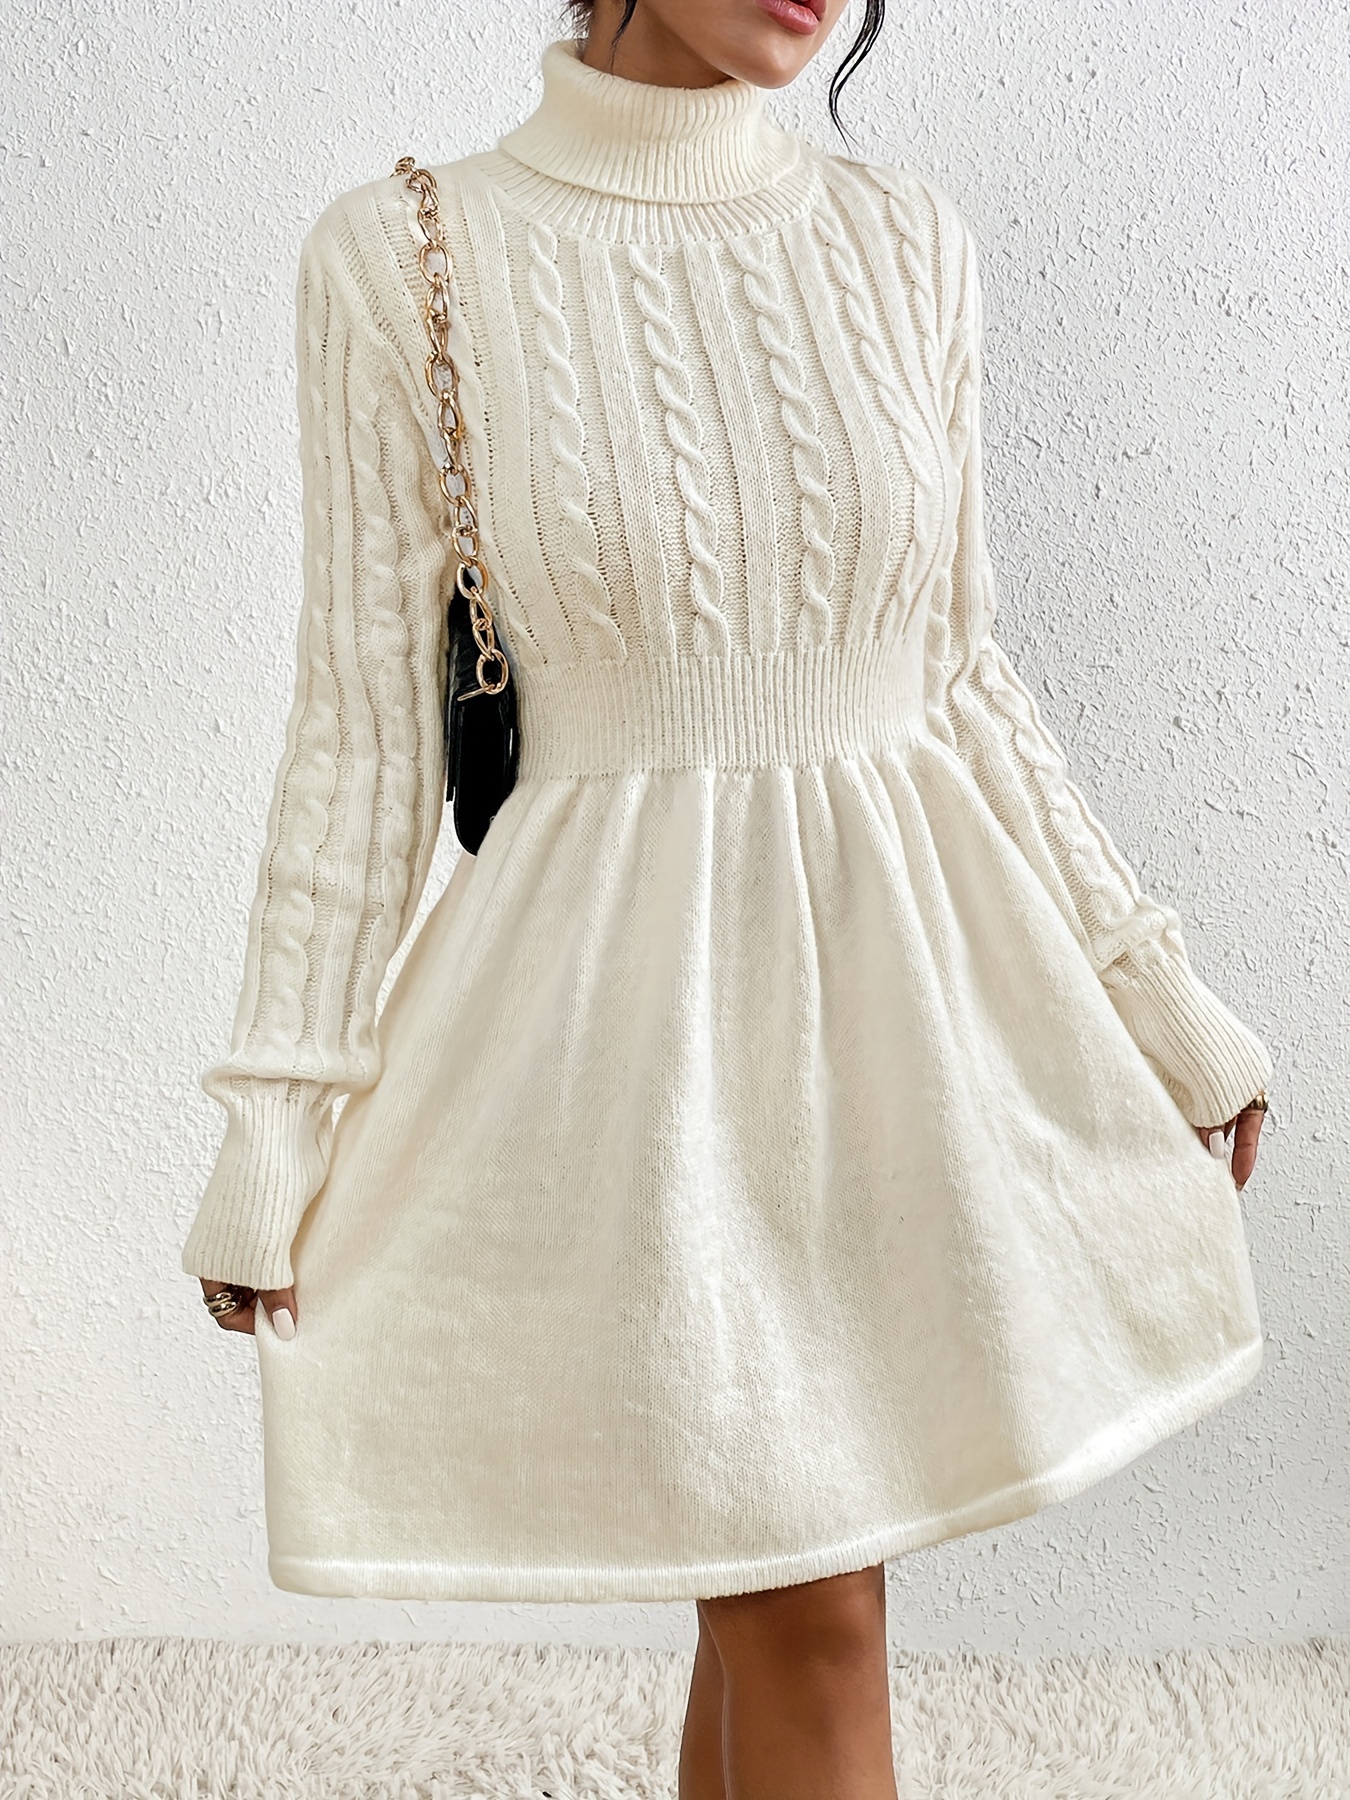 cable knit sweater dress elegant turtleneck long sleeve dress womens clothing details 2